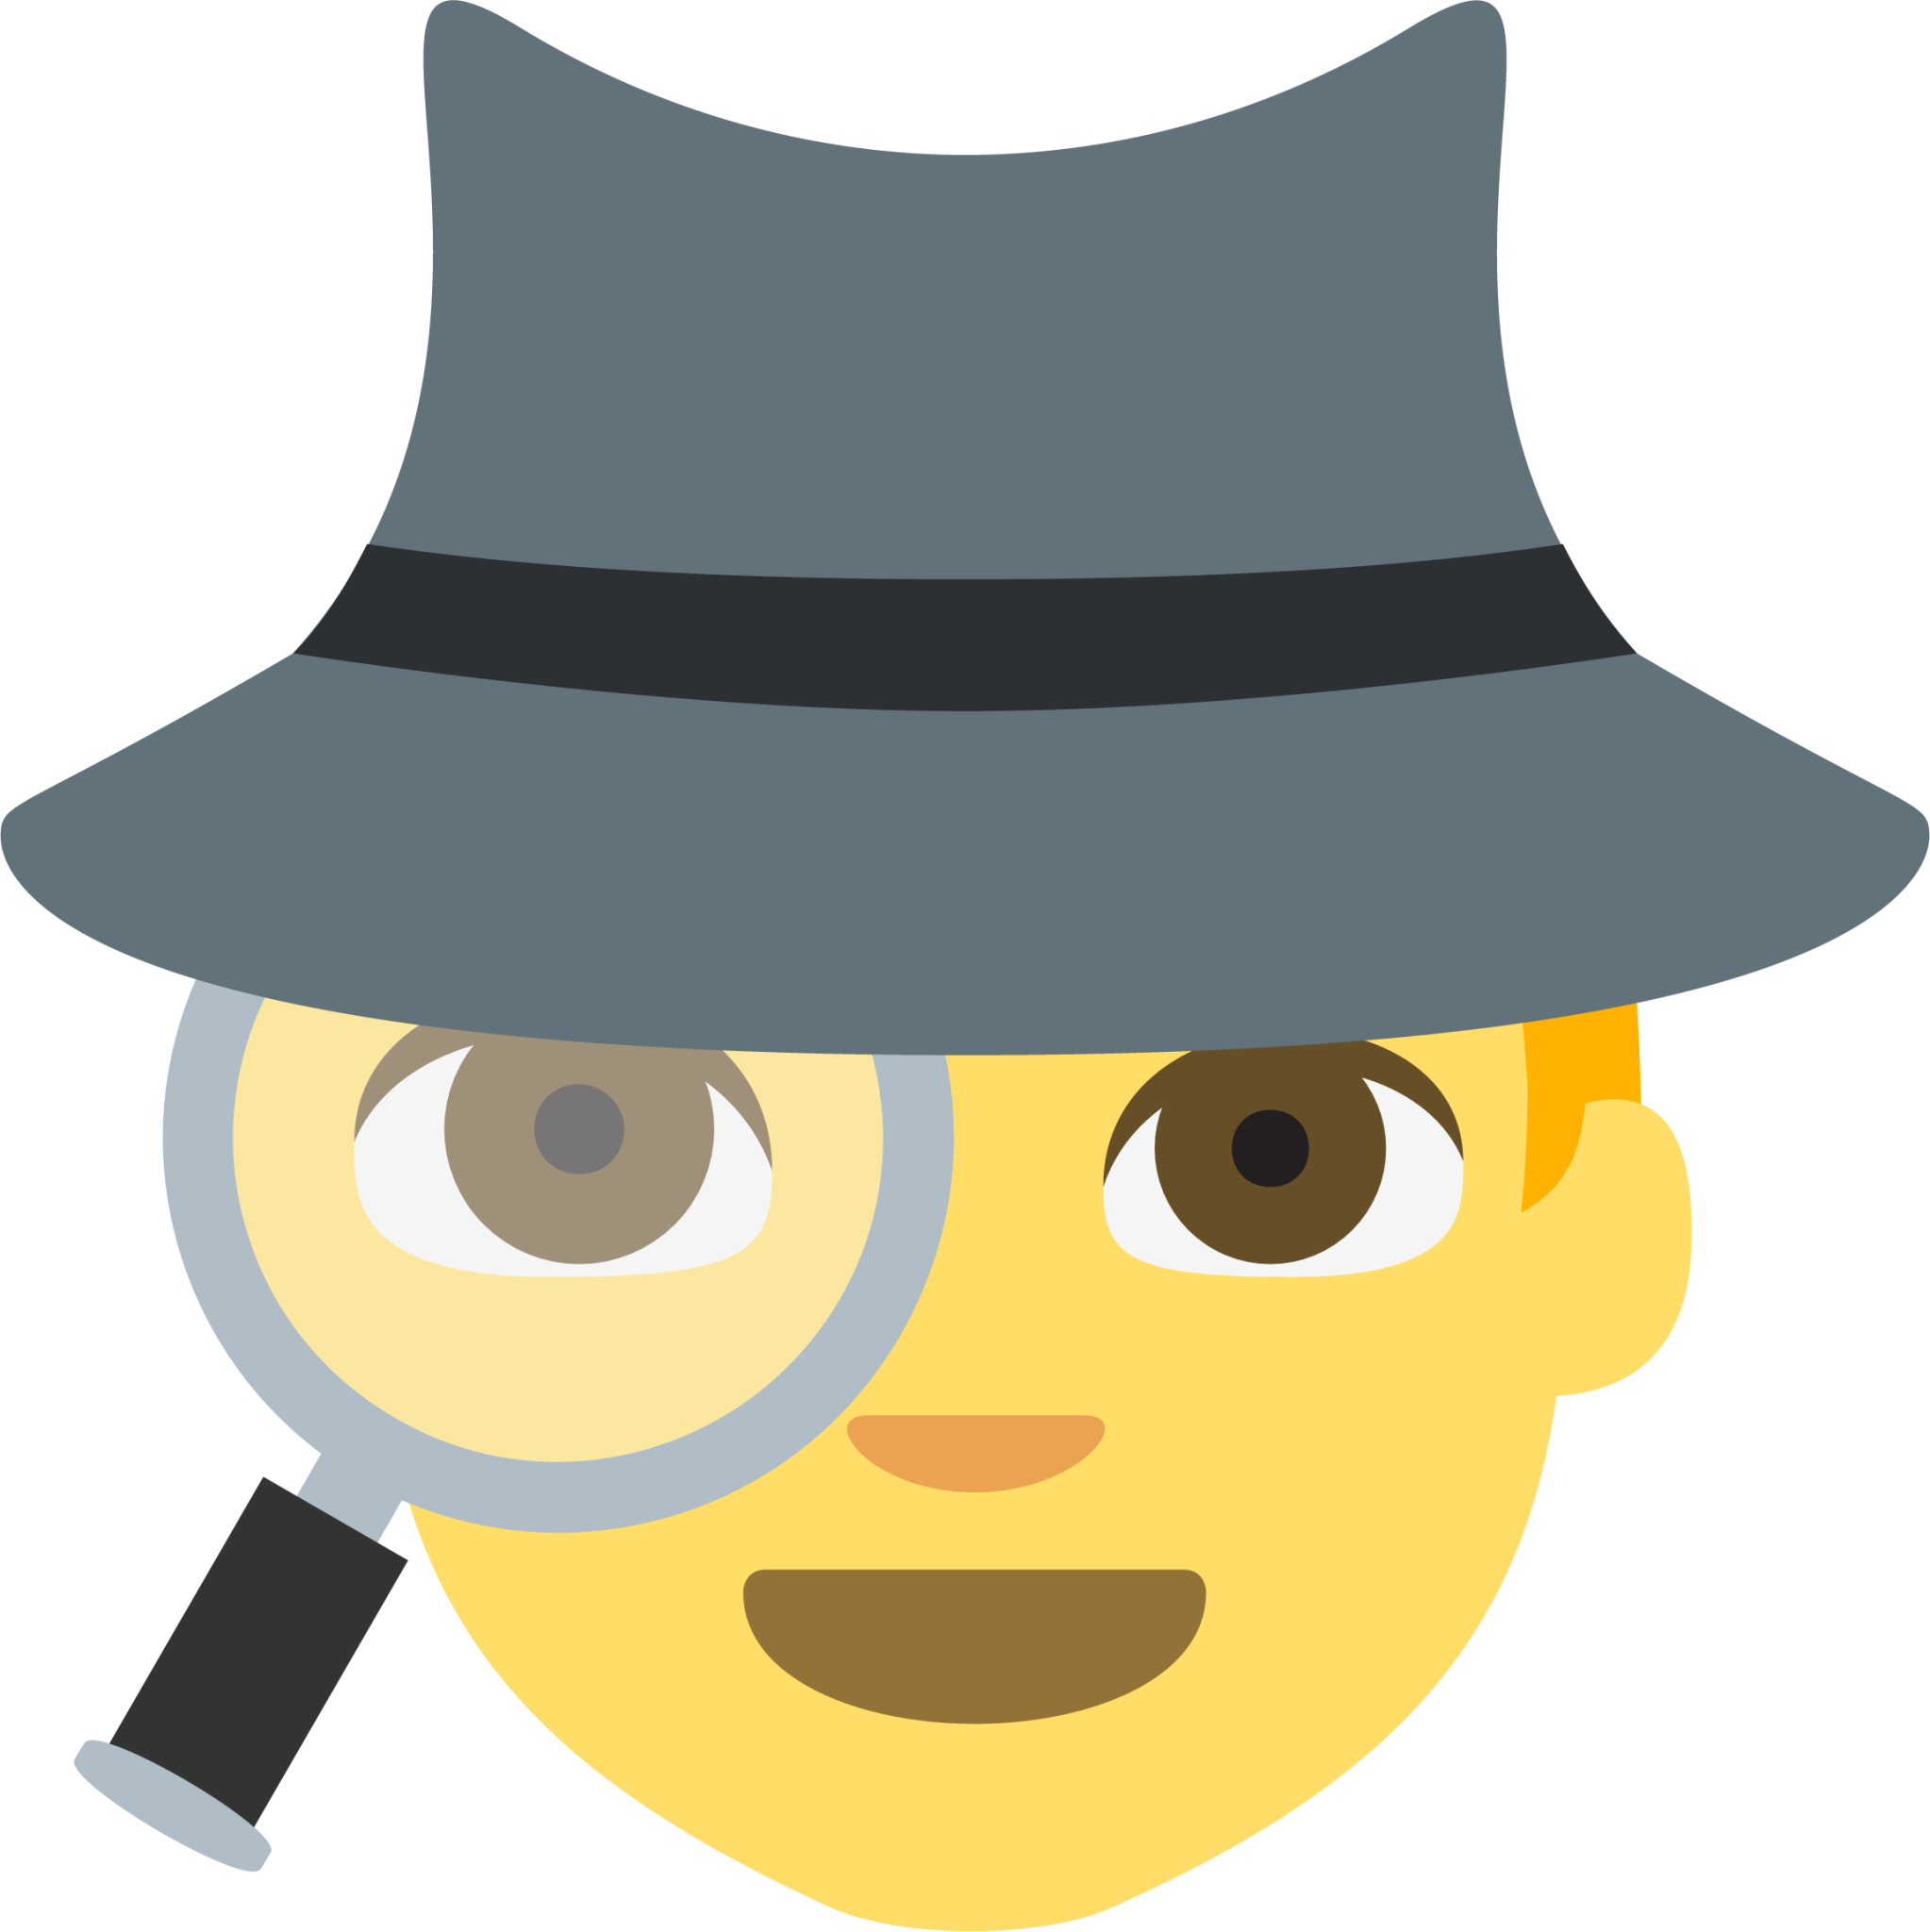 sleuth or spy emoji